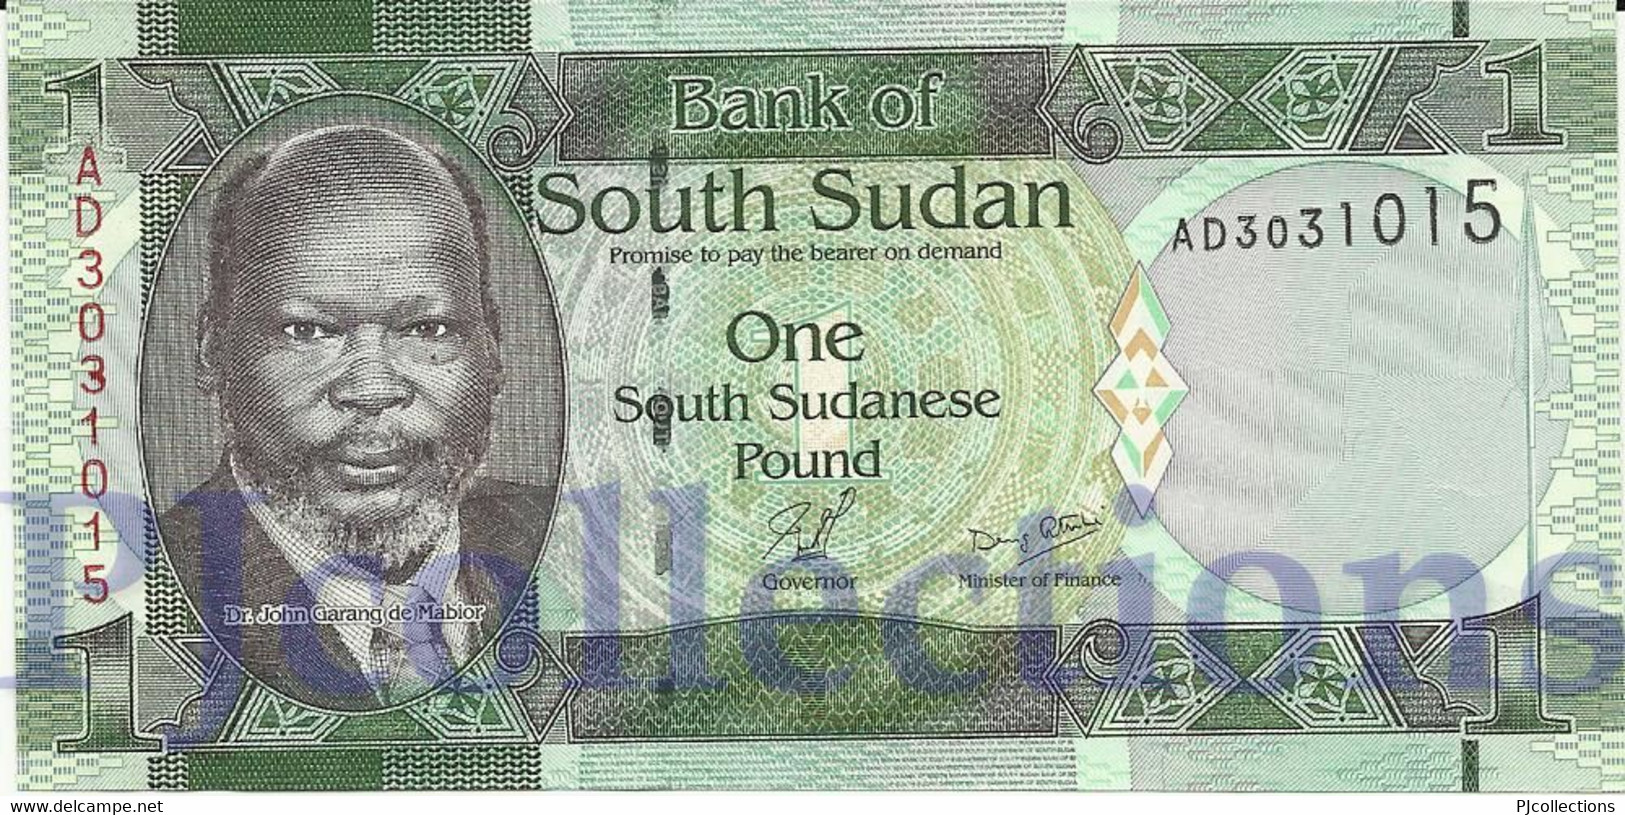 SOUTH SUDAN 1 POUND 2011 PICK 5 UNC - South Sudan